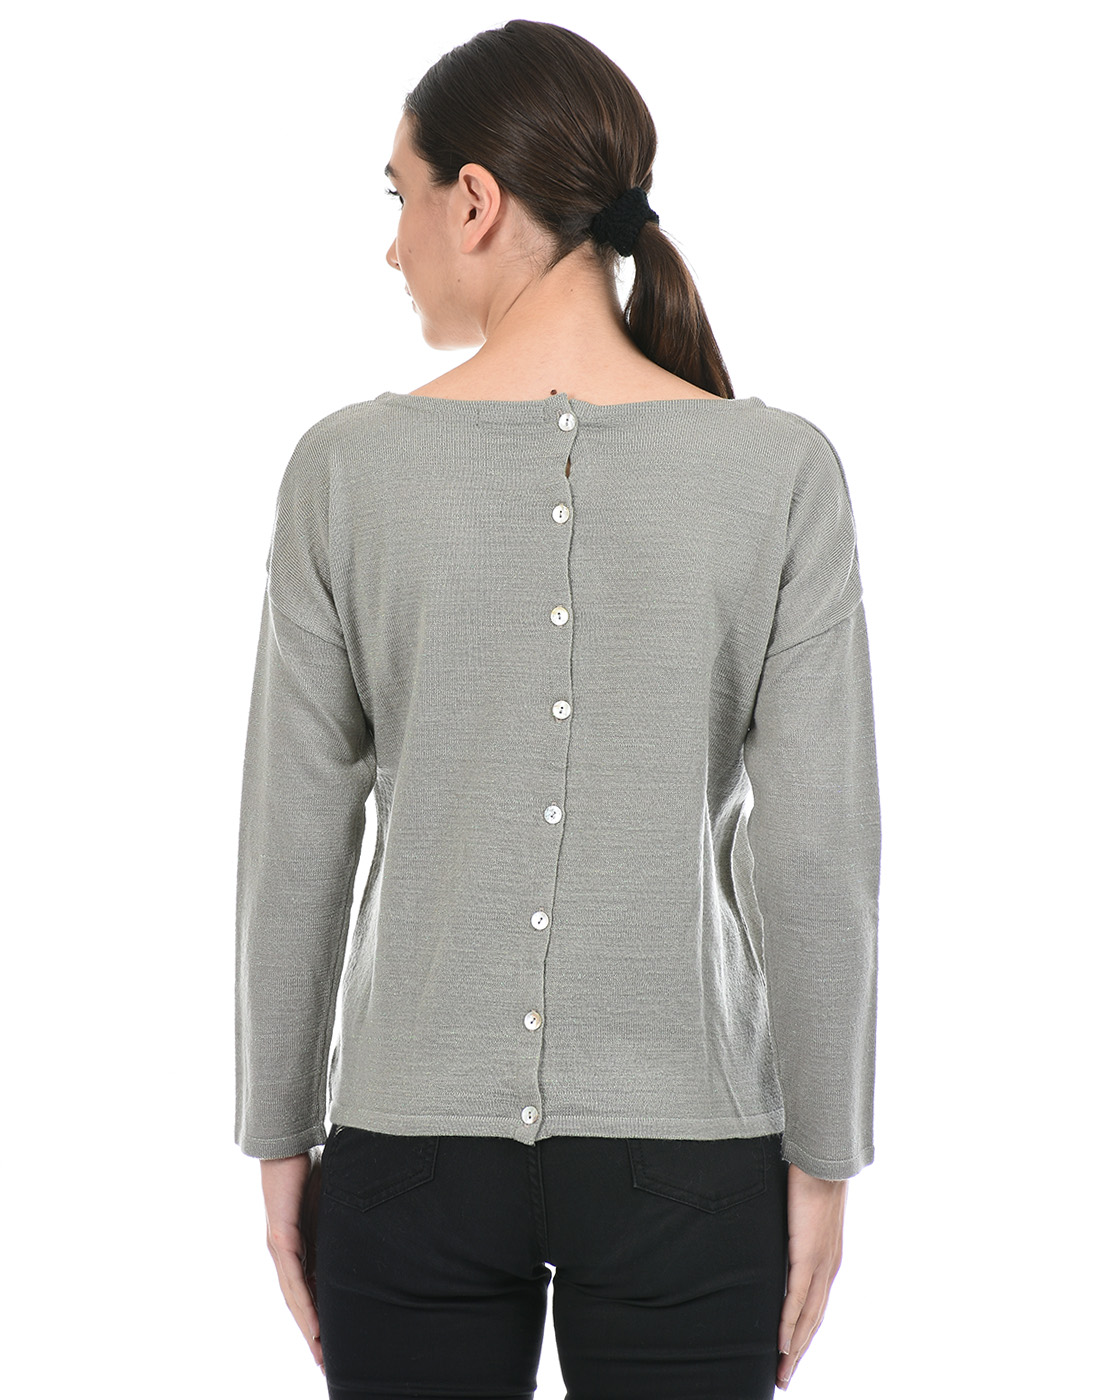 Species Women Grey Printed Sweater